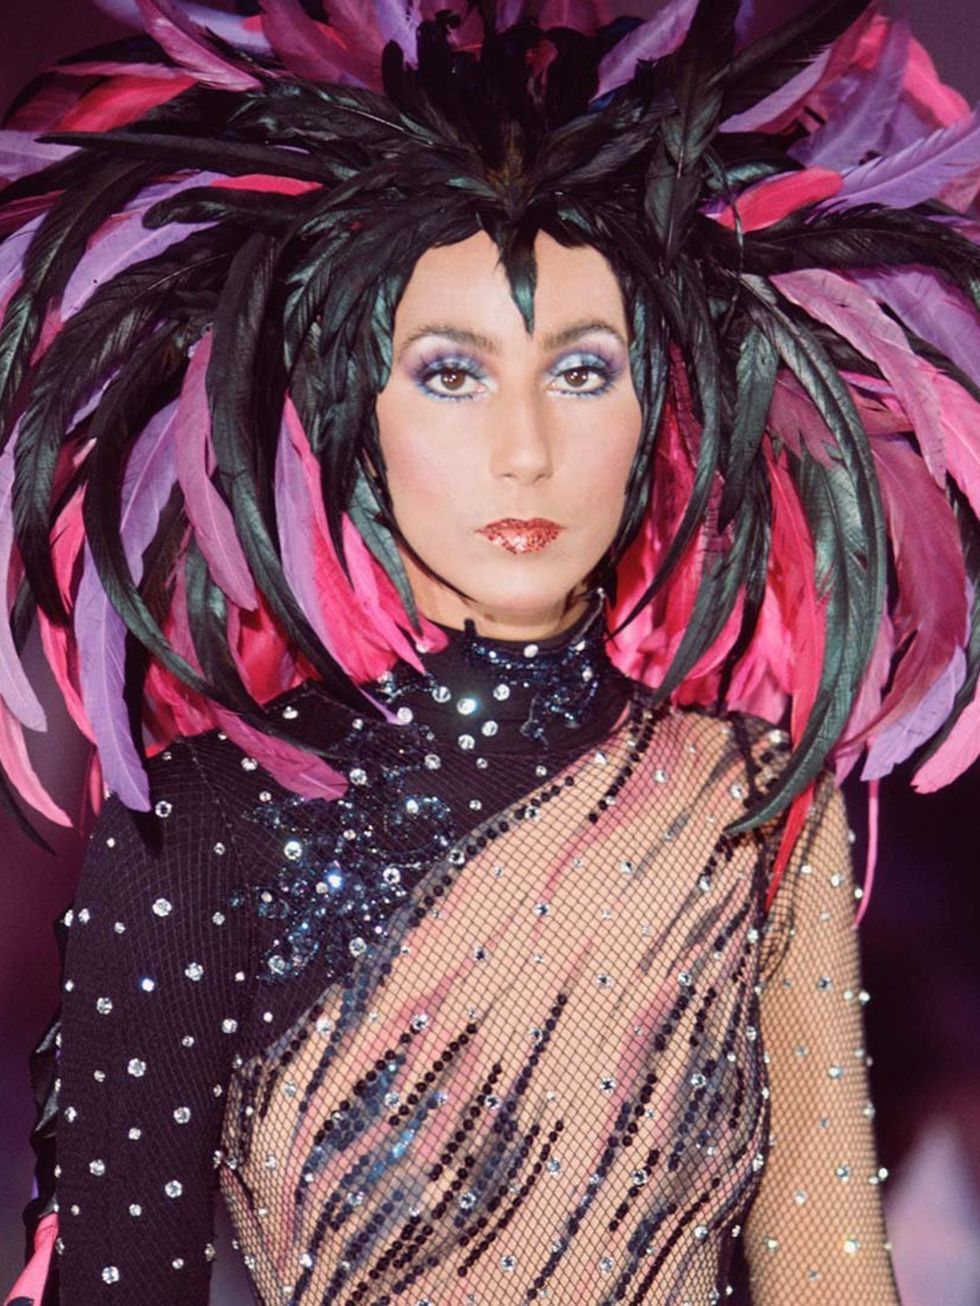 &lt;p&gt;Another low-key costume for the &lt;em&gt;Sonny &amp; Cher Comedy Hour&lt;/em&gt;, 1972.&lt;/p&gt;&lt;p&gt;&lt;a href=&quot;http://www.elleuk.com/star-style/celebrity-style-files/timeless-glamour-fashion-icons-joan-collins-judi-dench-jane-fonda&q